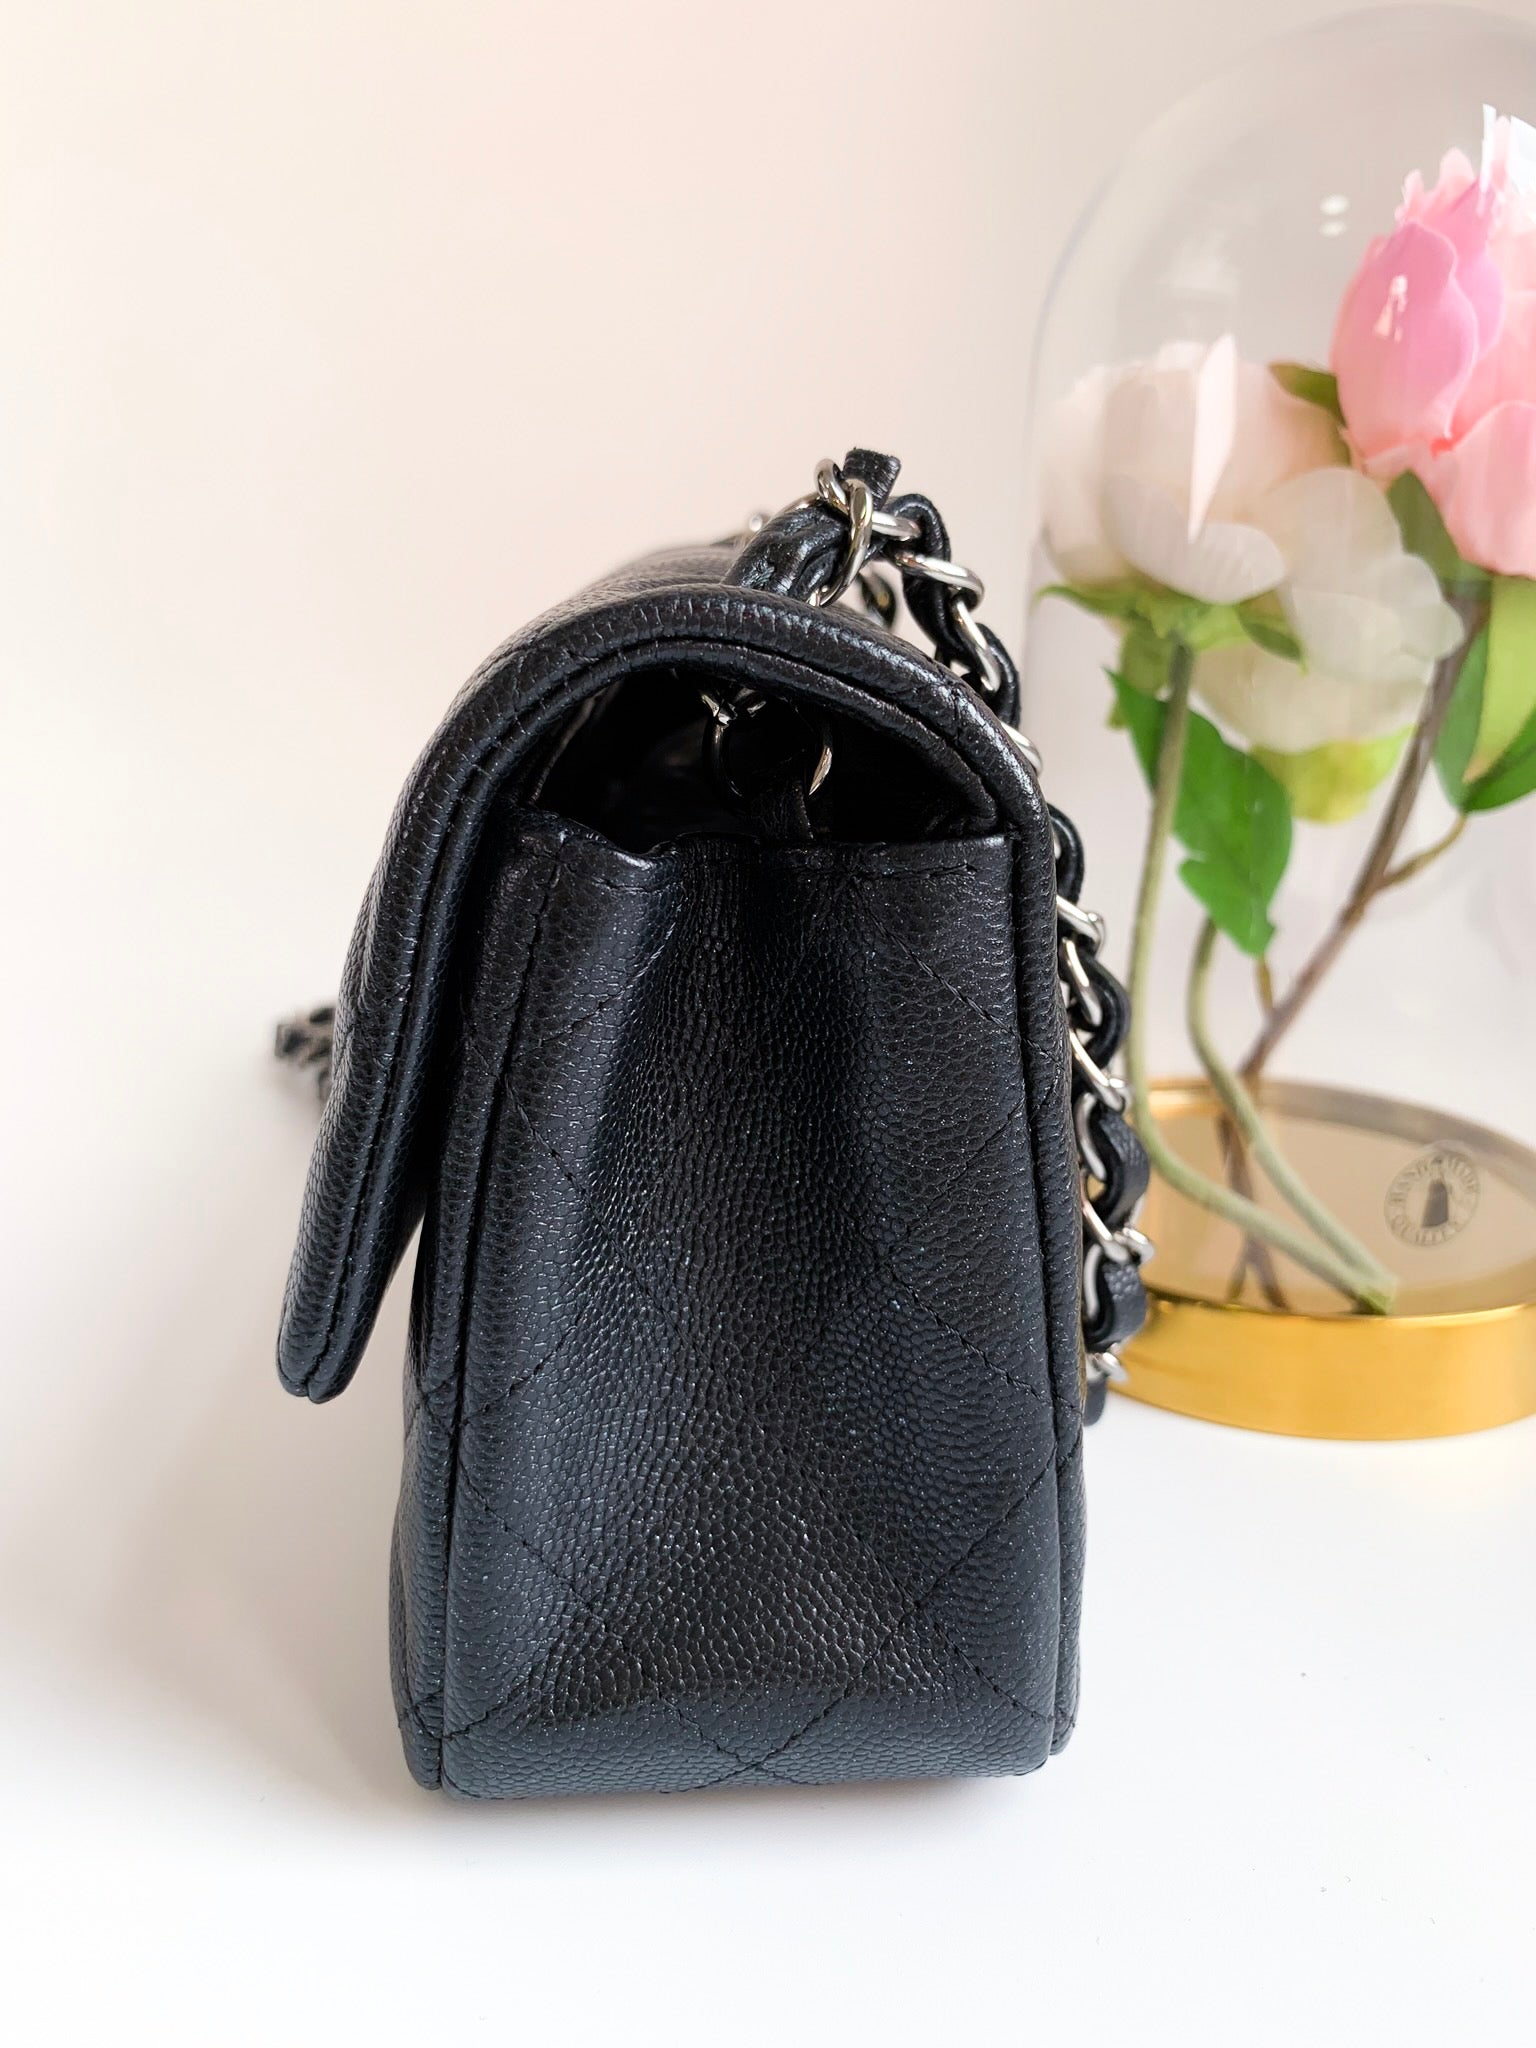 Black And Beige Chanel Bag - 83 For Sale on 1stDibs